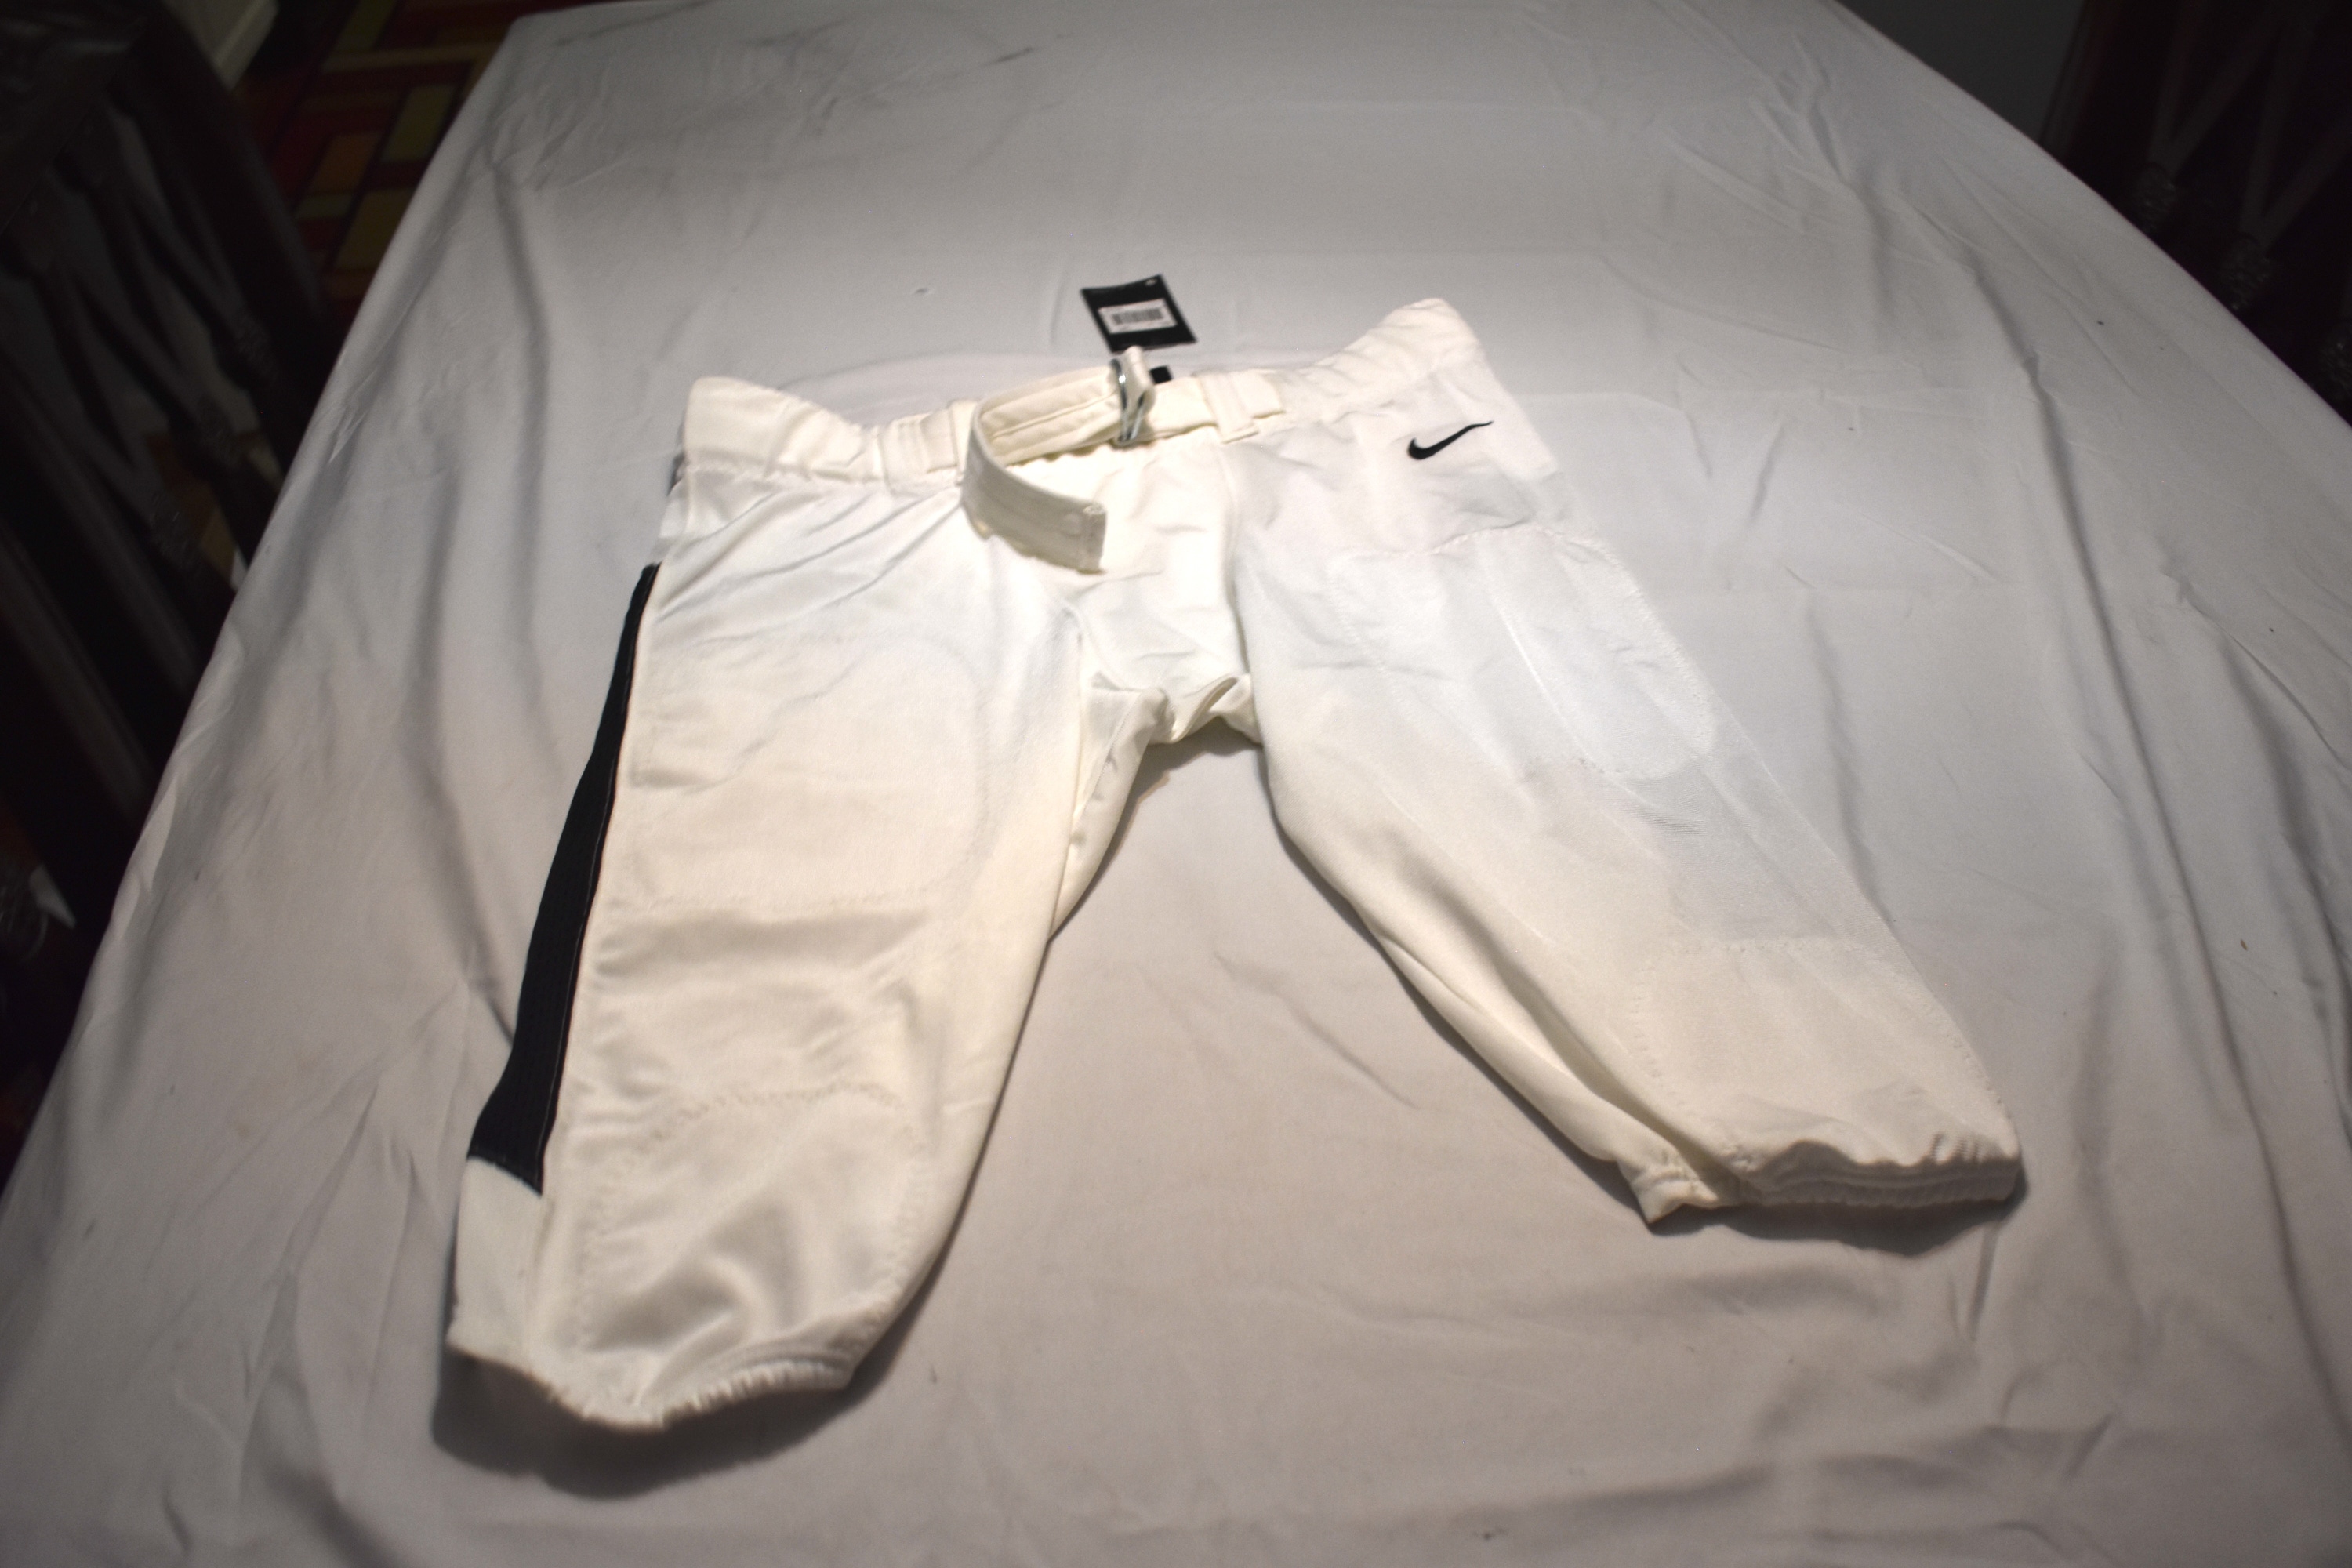 NEW - Nike Vapor Vented Performance Football Pants, White/Black, XXL - NWT